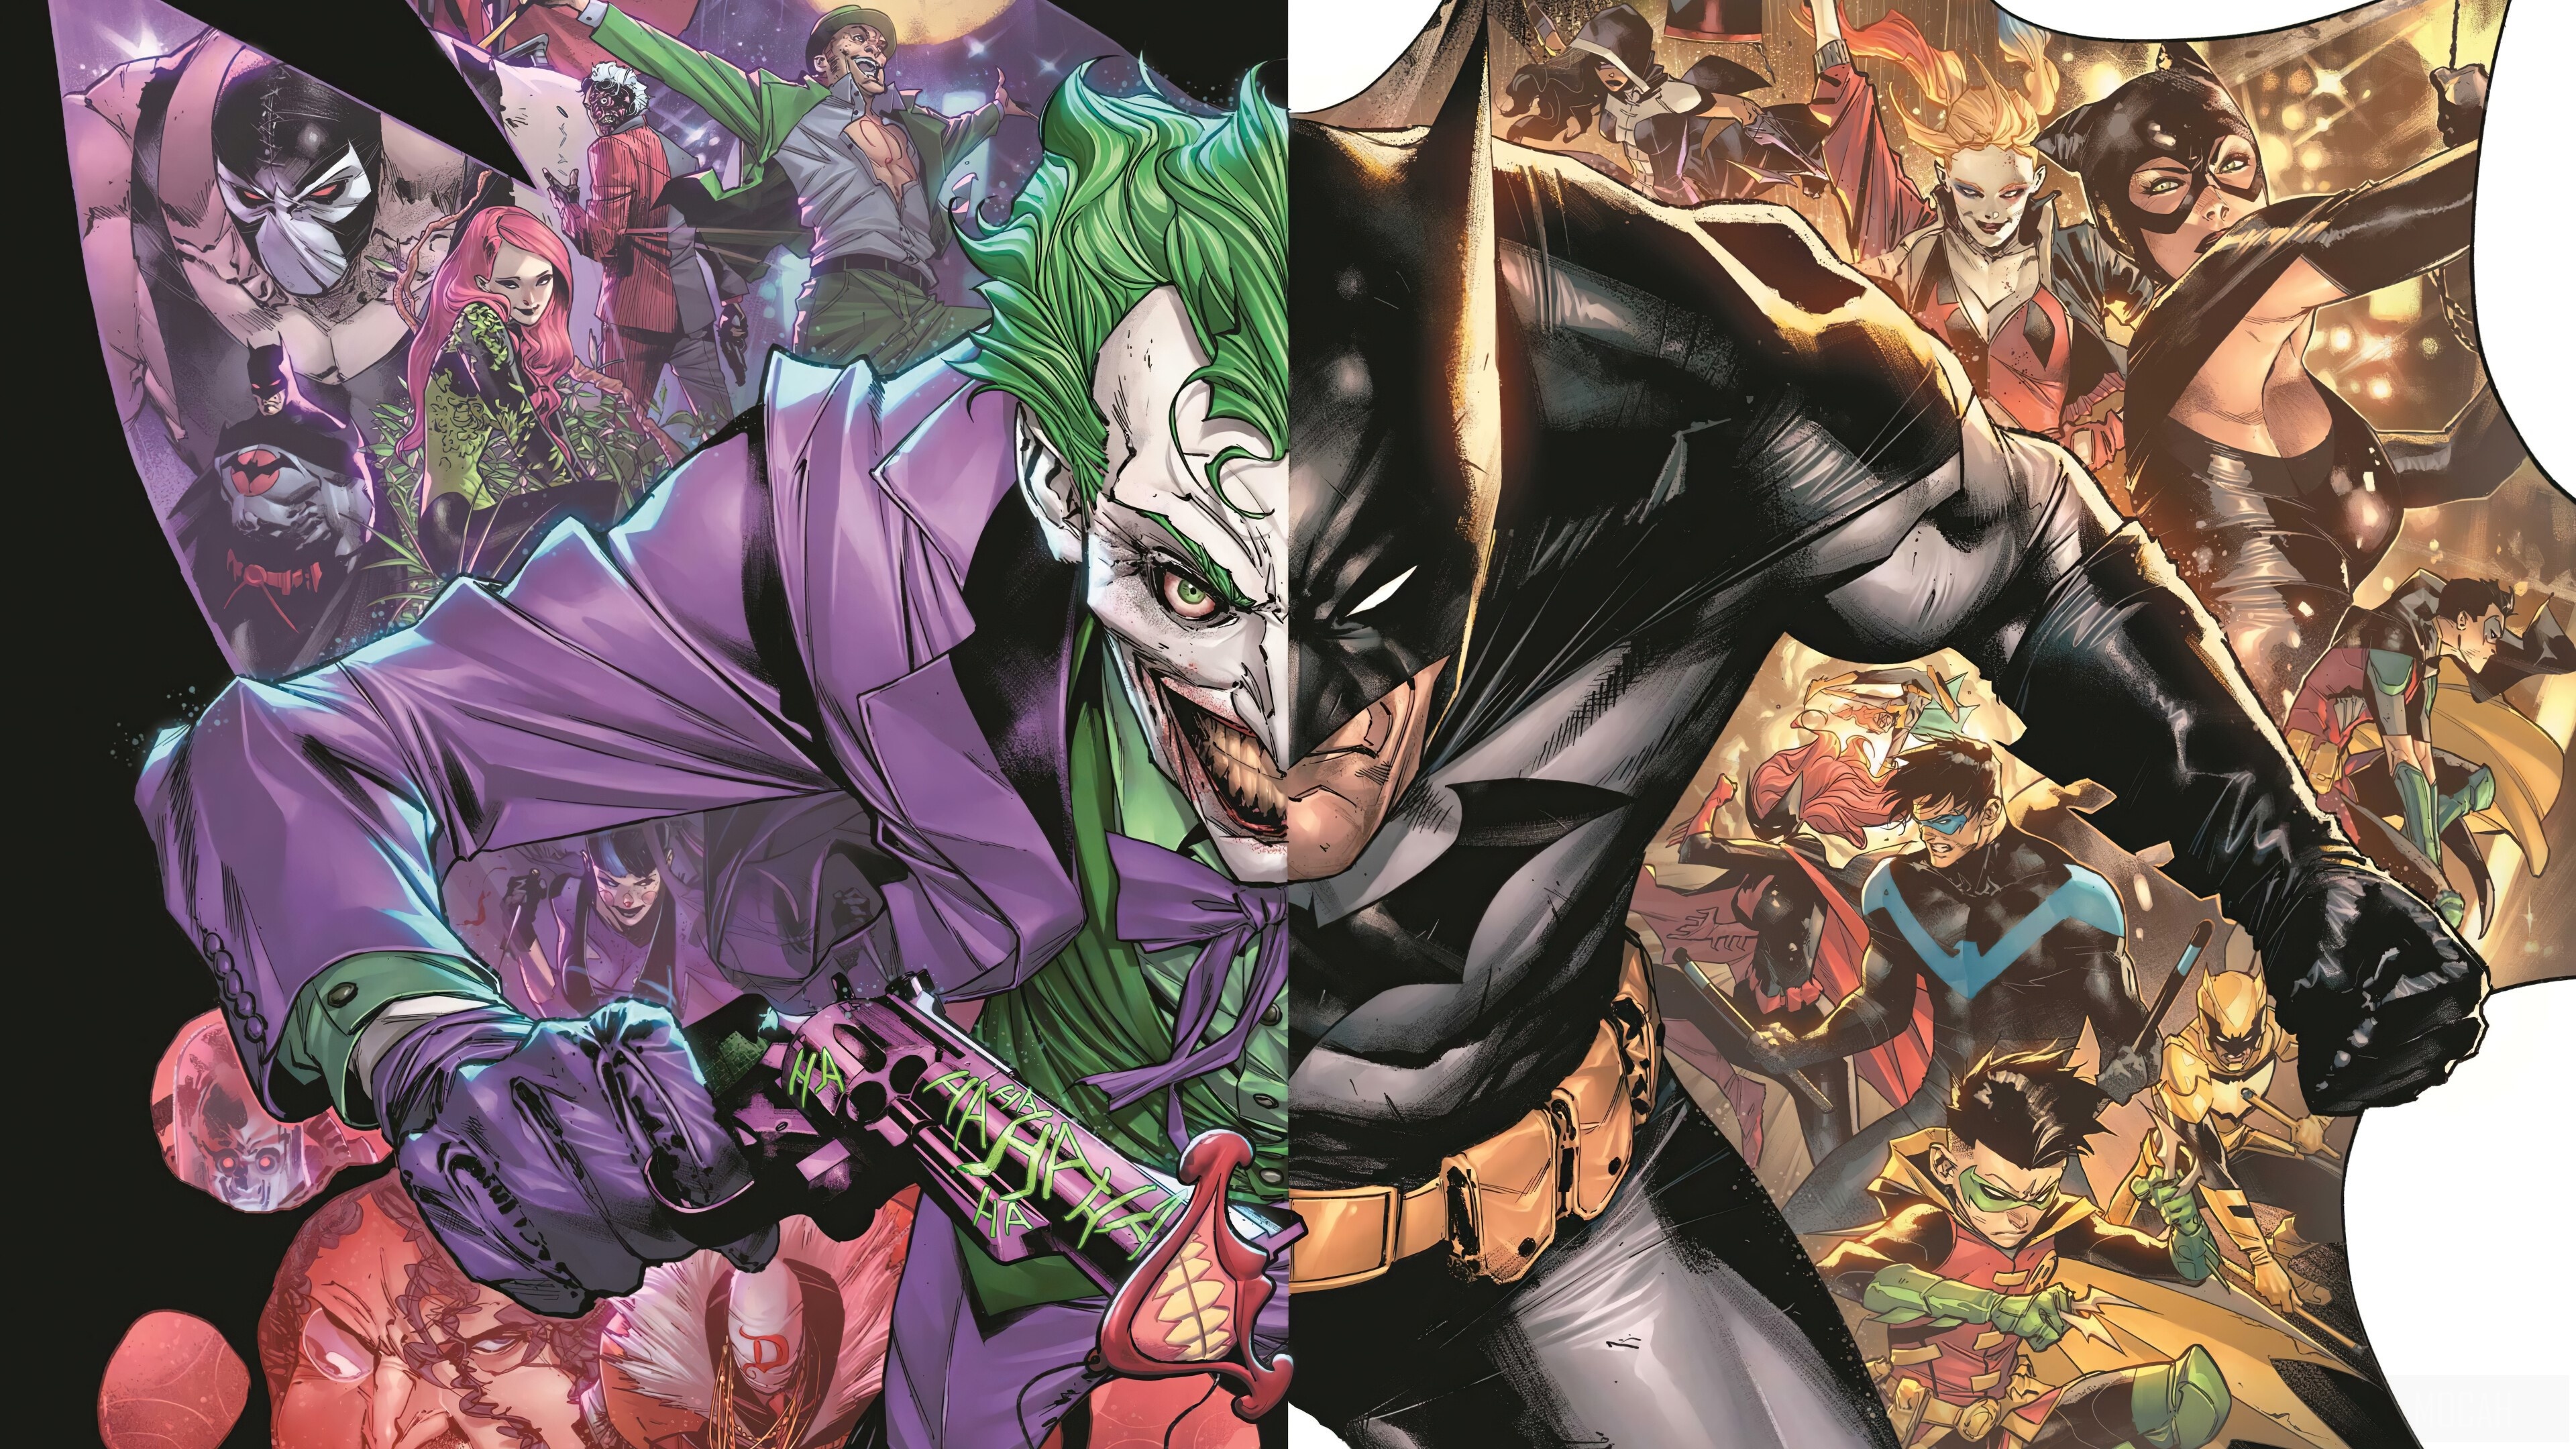 DC Comic Book wallpapers, Epic illustrations, Superhero visuals, 3840x2160 4K Desktop